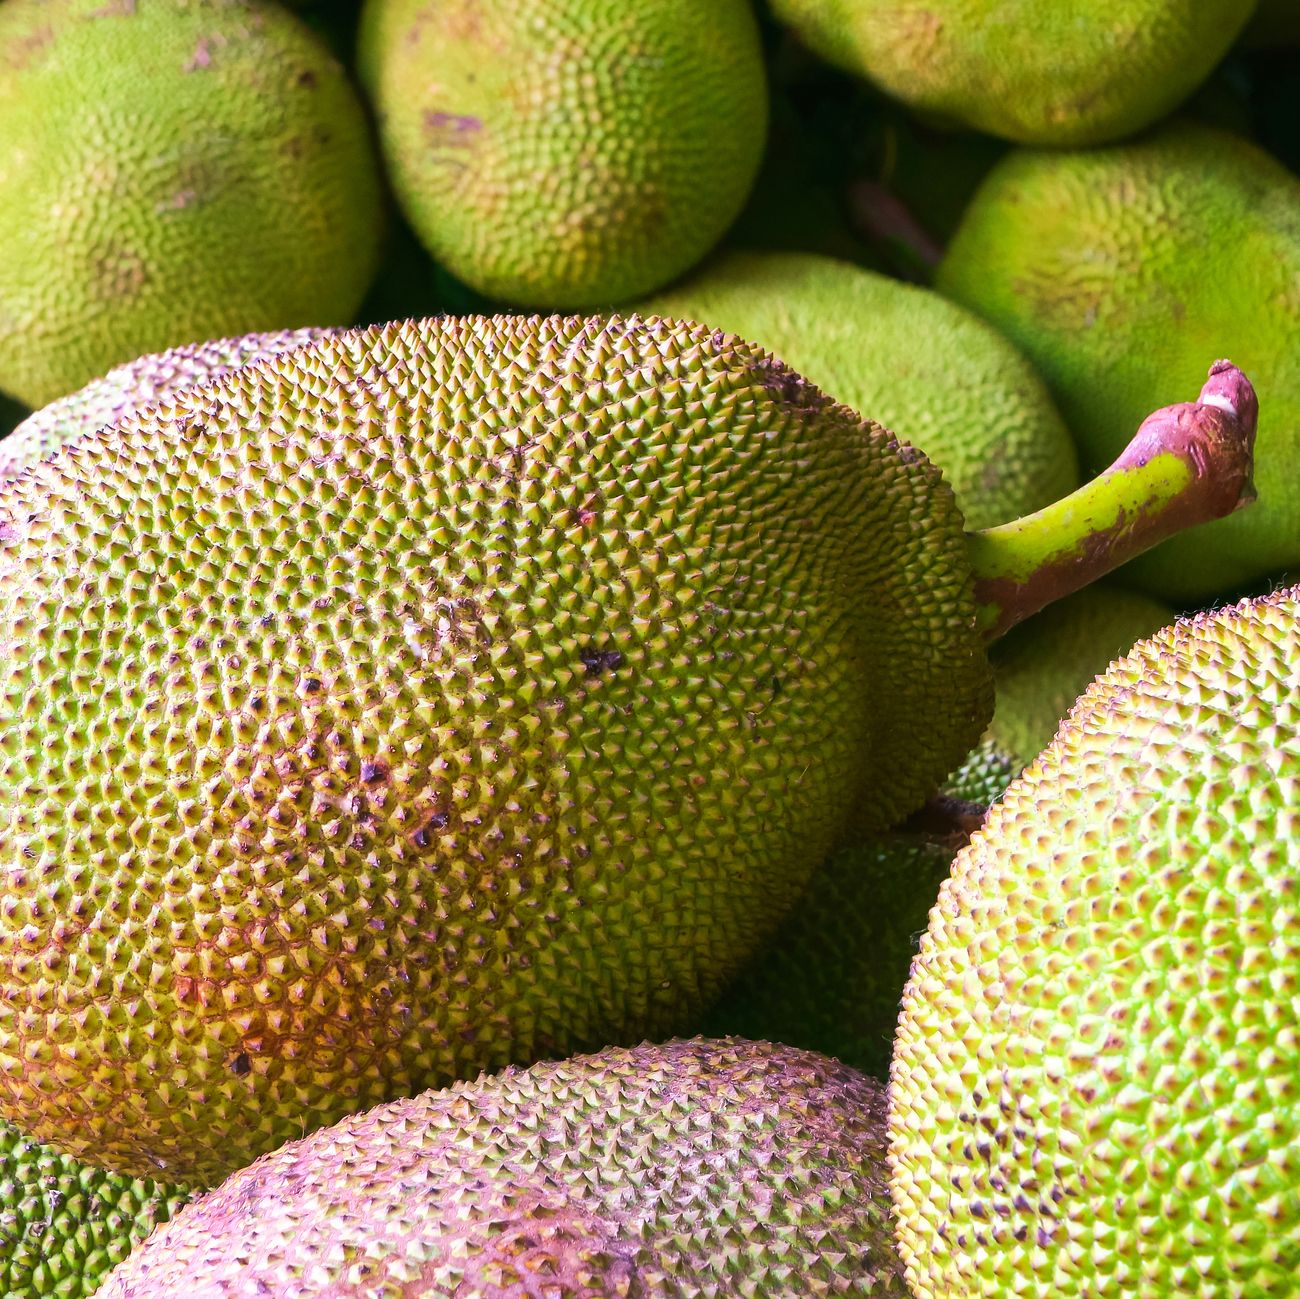 How to cook with jackfruit